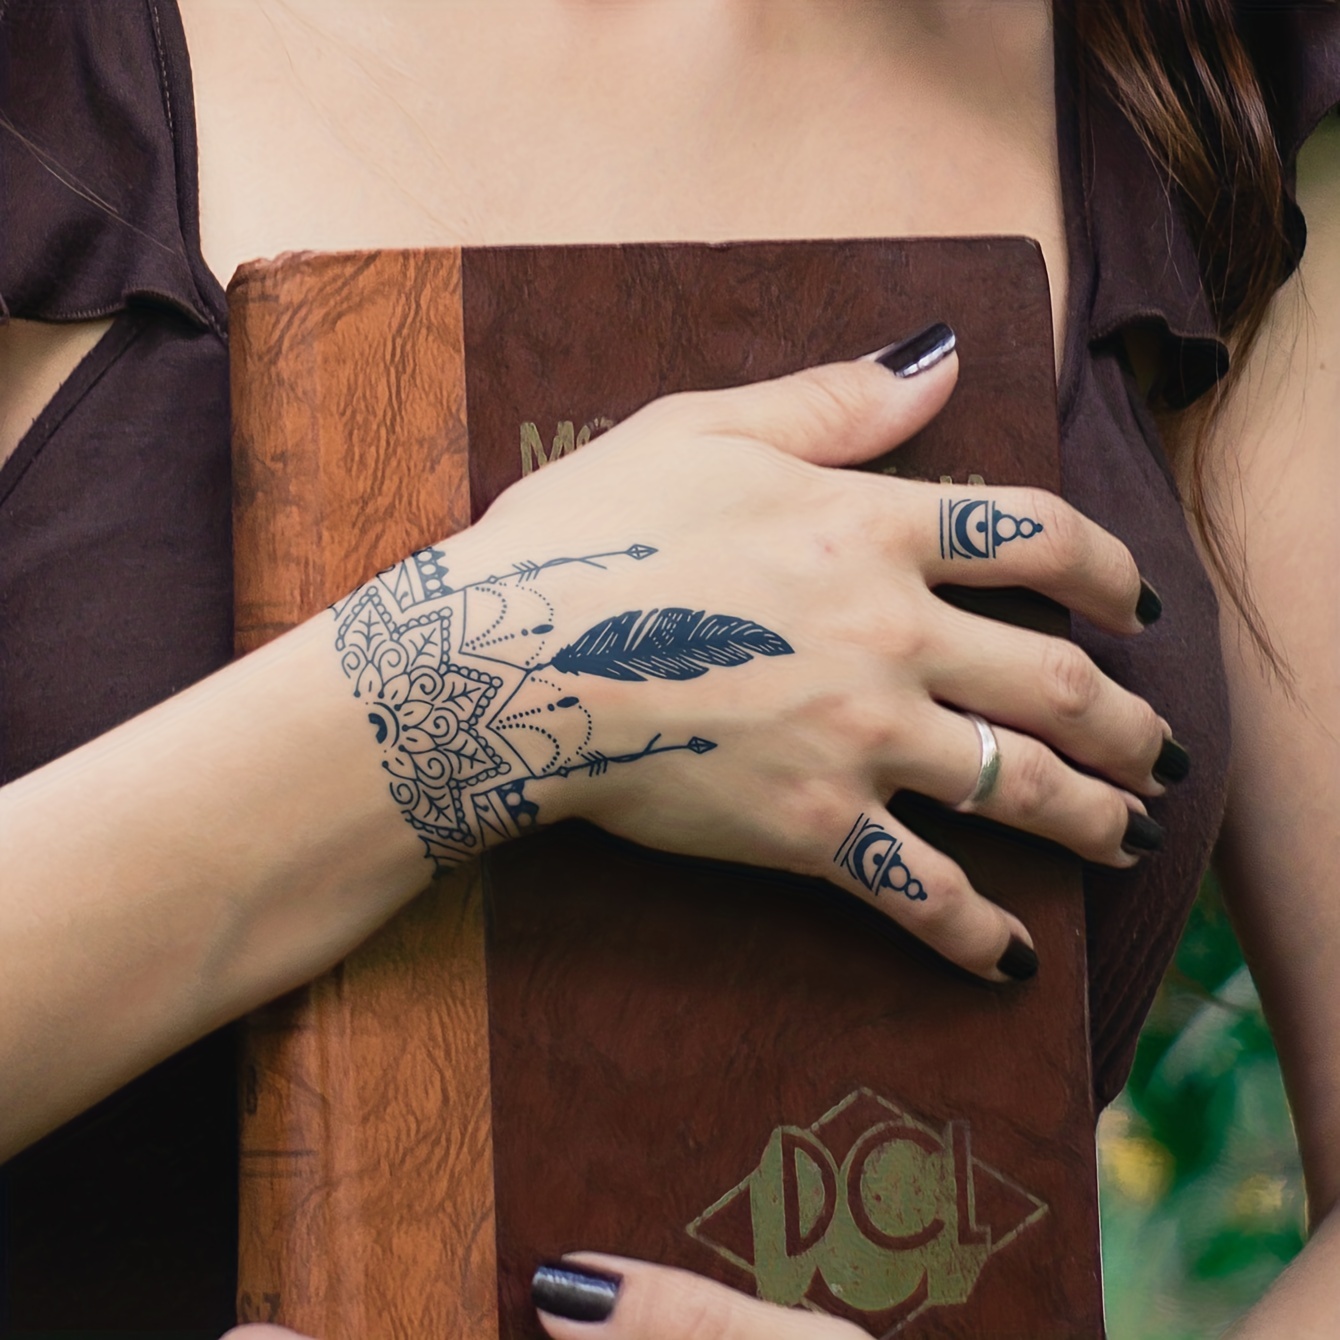 Cute small henna tattoos 💖💖 #mehndi... - Noor's Henna Art | Facebook